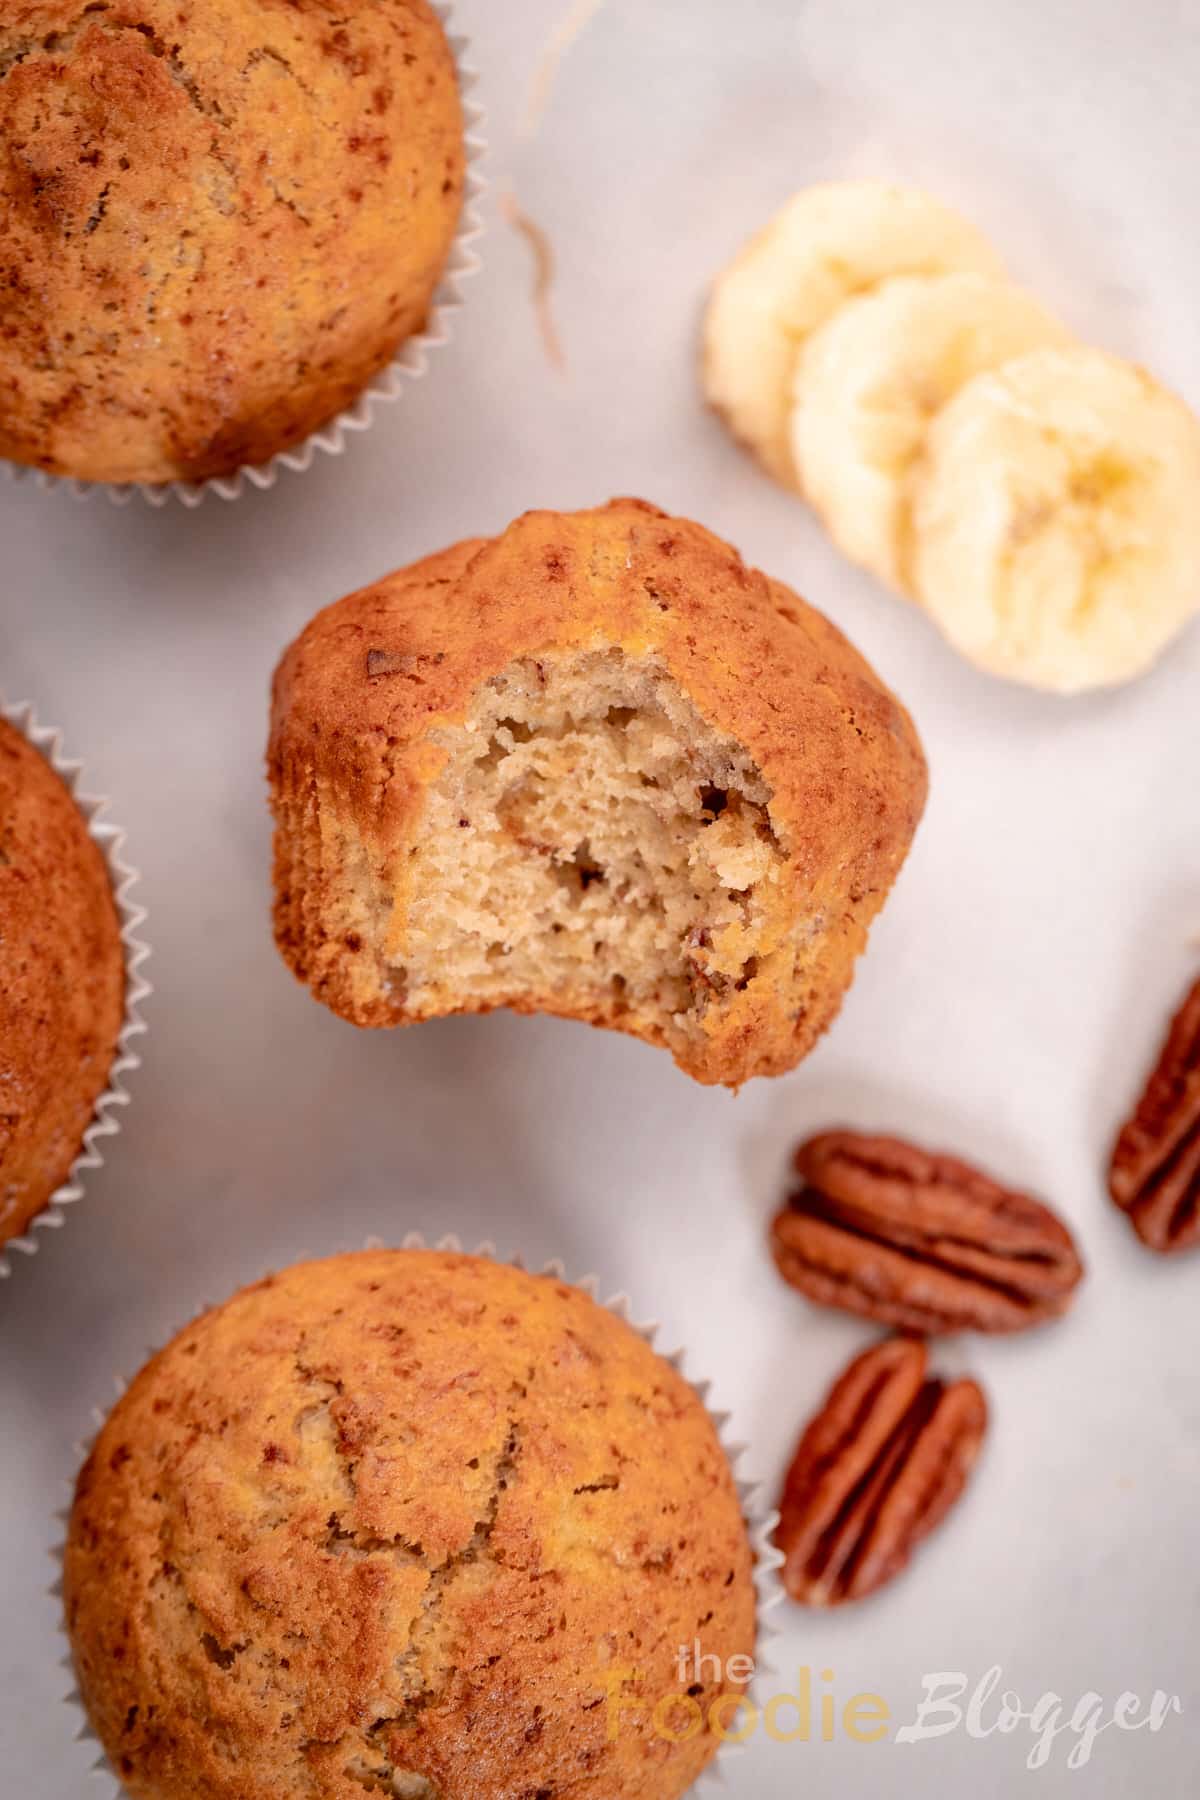 thefoodieblogger banana nut muffins recipe 2